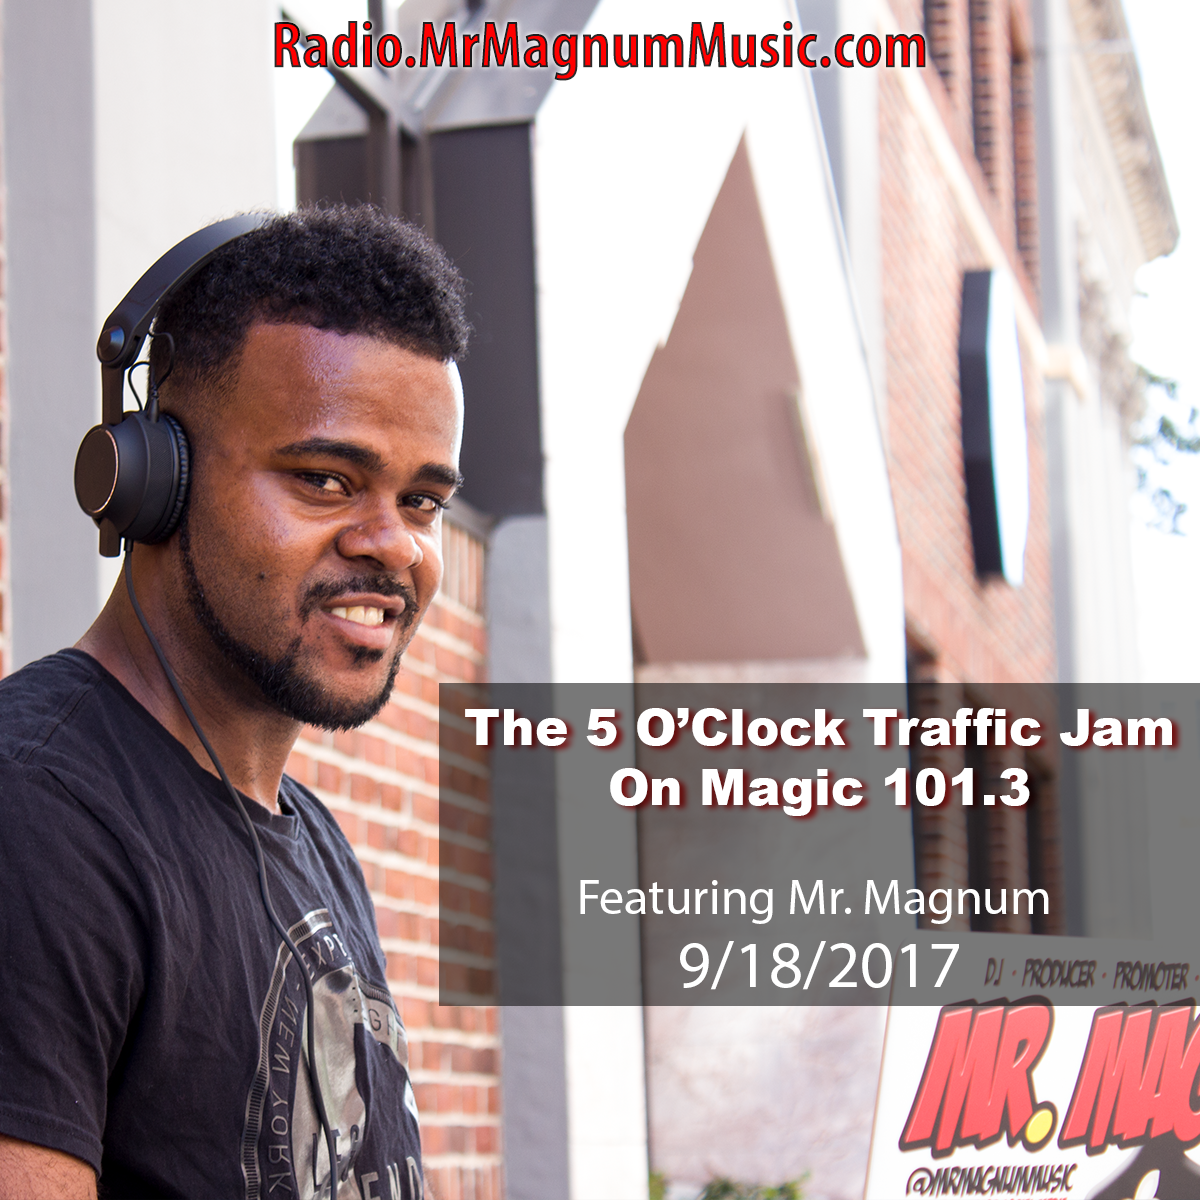 The 5 O'Clock Traffic Jam 20170918 featuring Gainesville's #1 DJ, Mr. Magnum on Magic 101.3